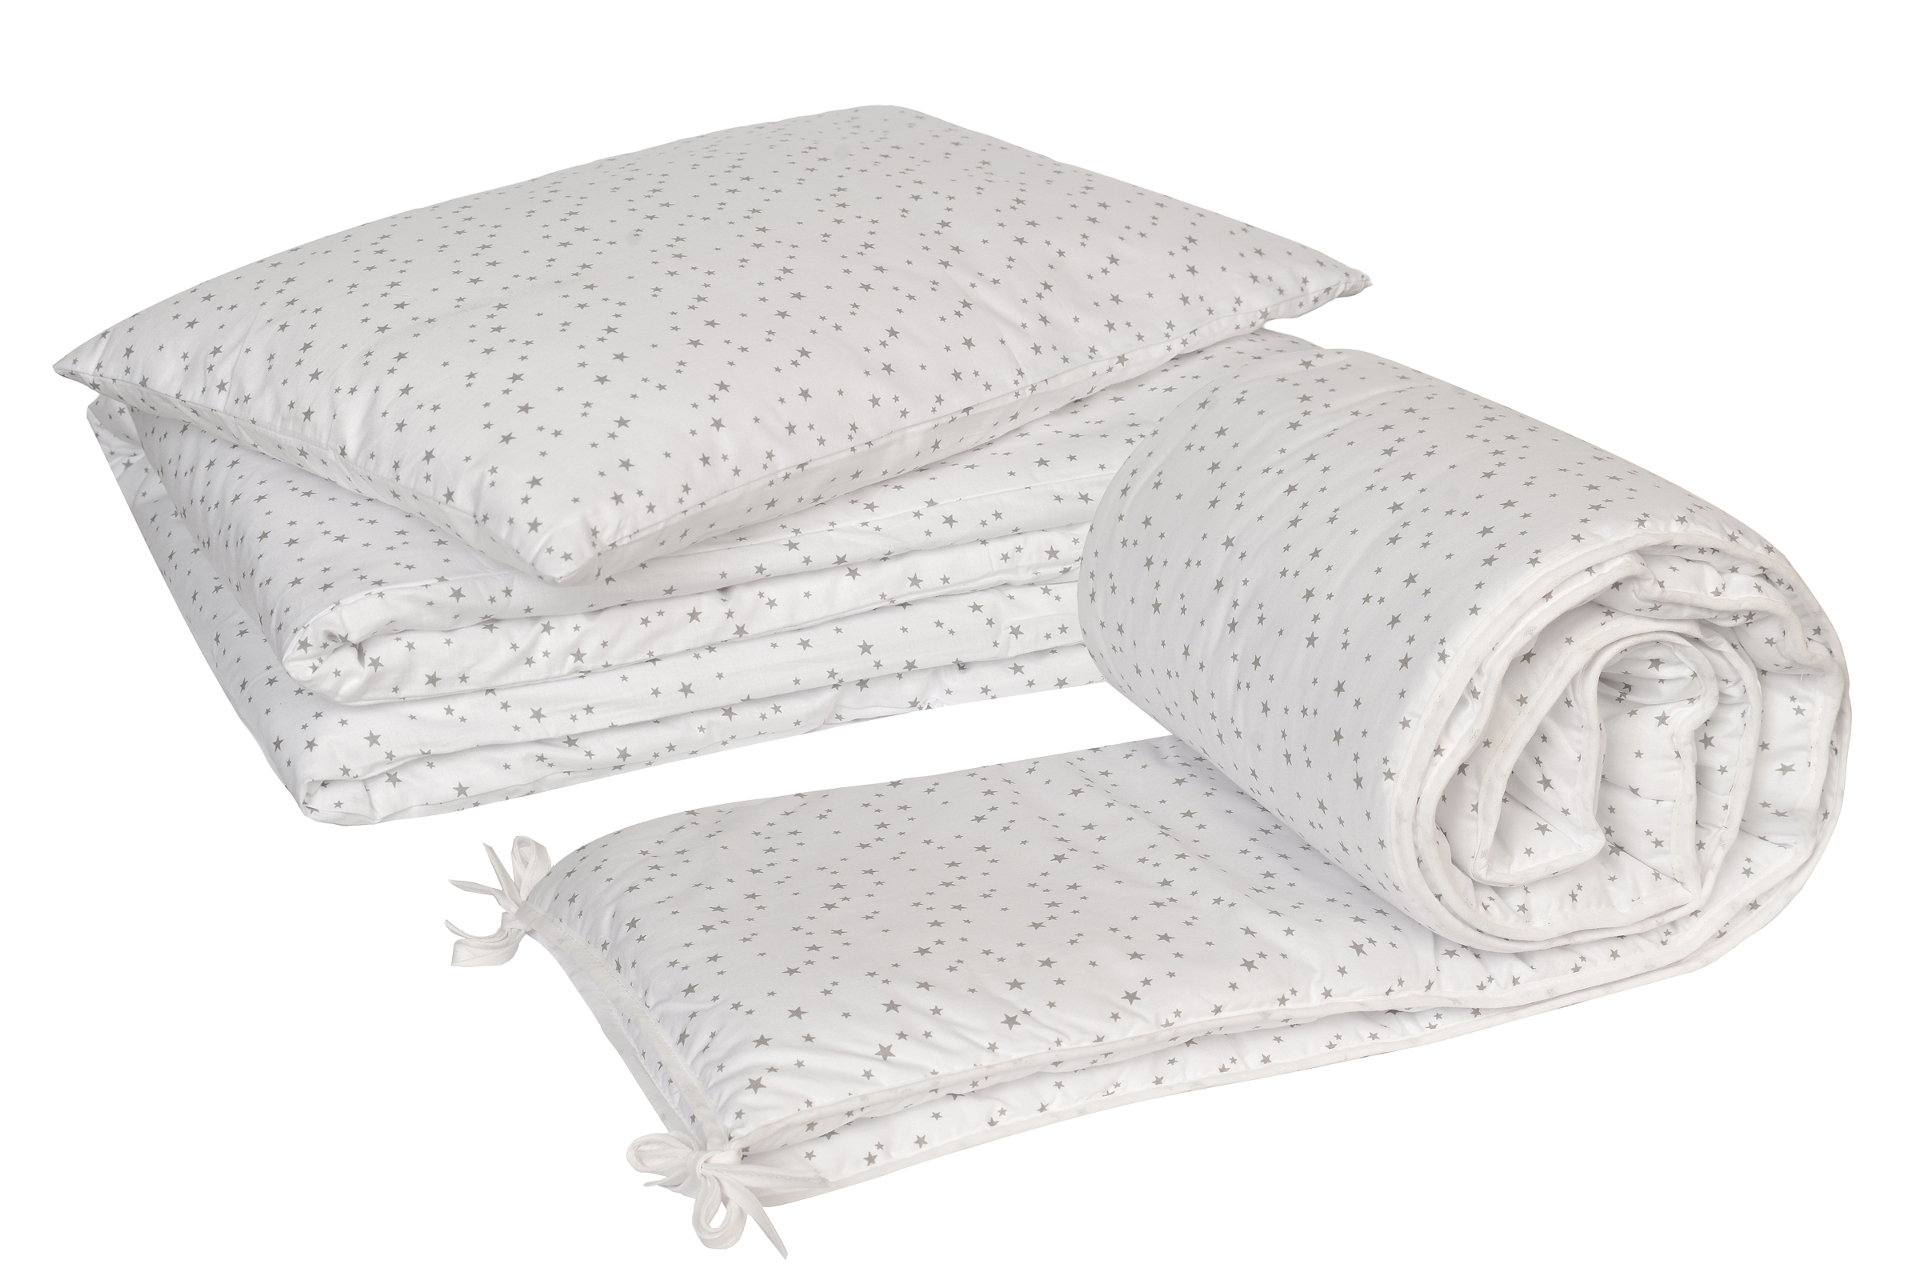 Bedding set - 3 elements - quilt and pillow cover + cot bumper